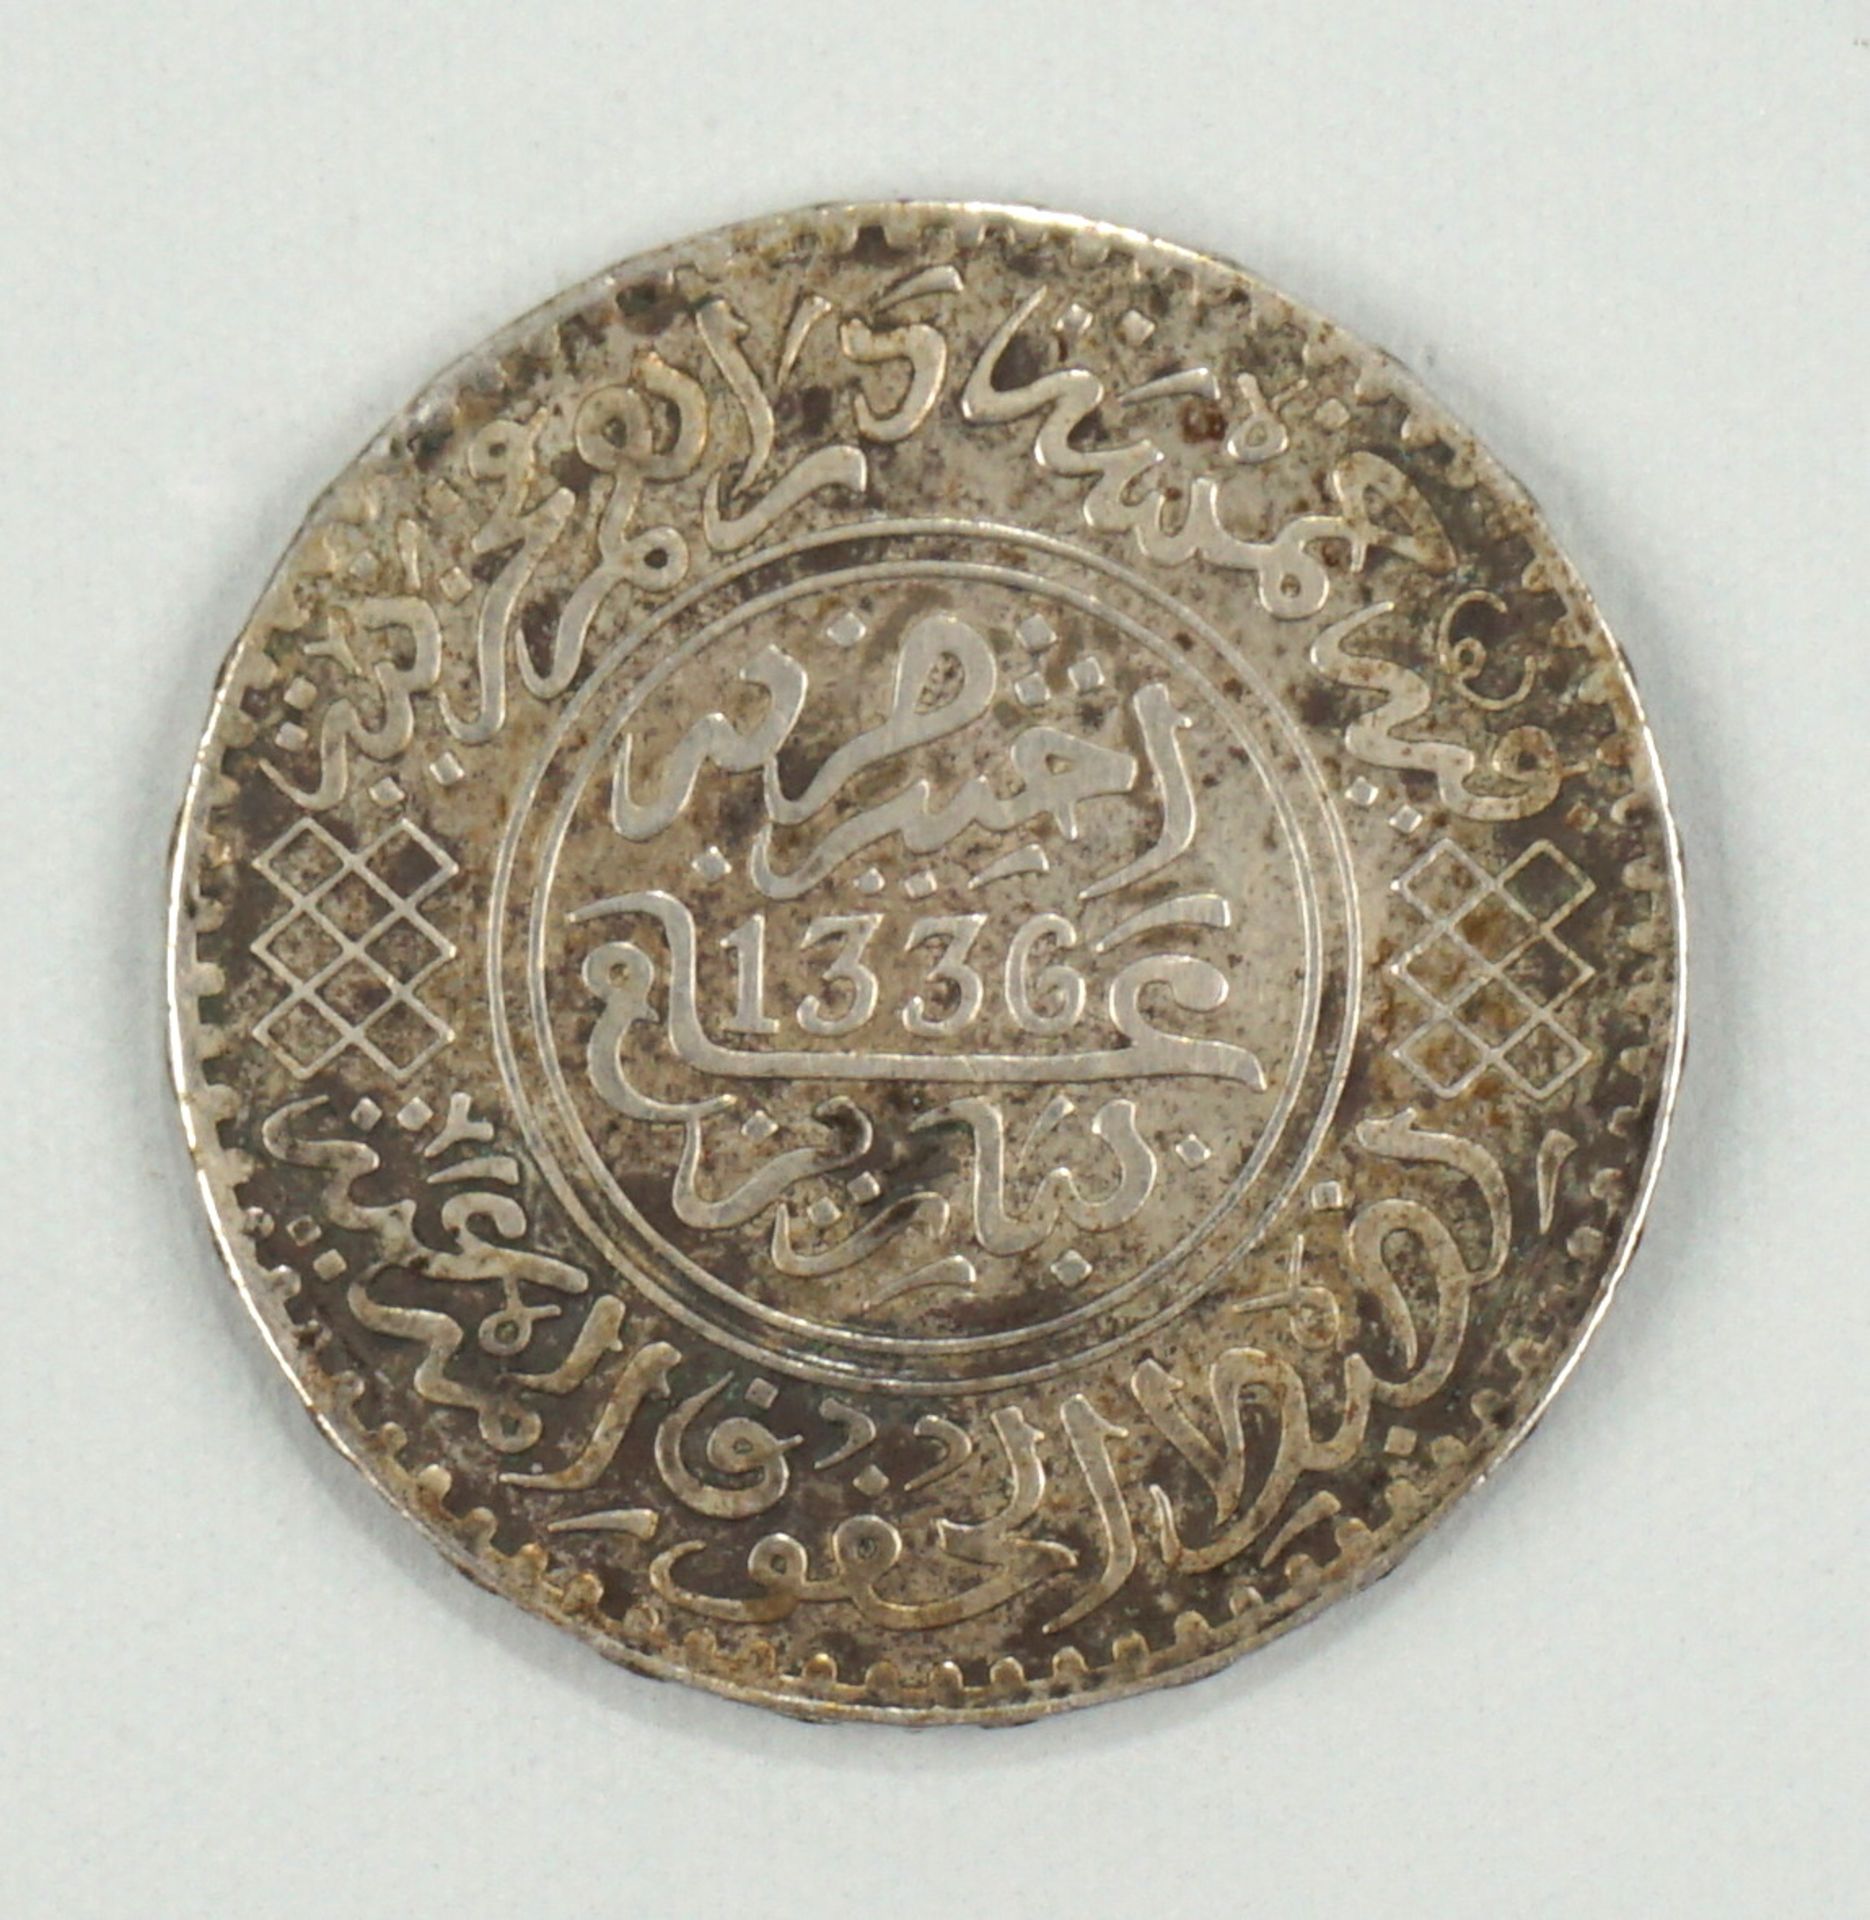 Marokko 5 Dirhams (1/2 Rial) 1917, Silber - Bild 2 aus 2